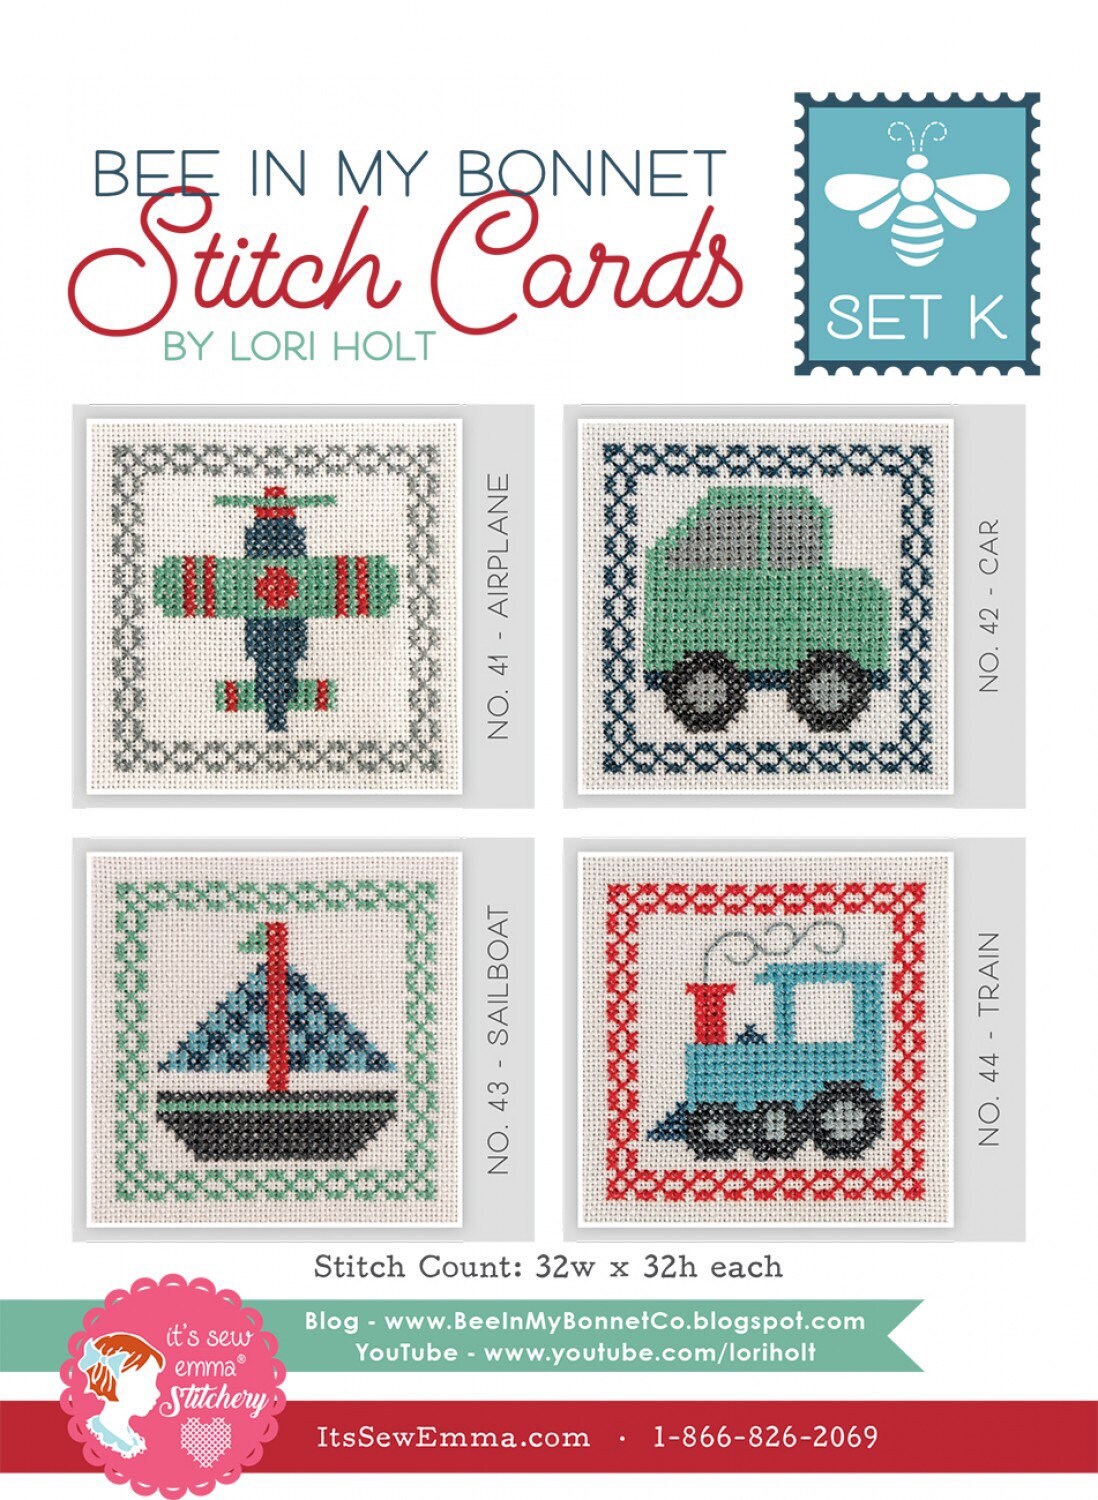 Stitch Cards Set K - Cross Stitch Pattern - It’s Sew Emma - Lori Holt - Bee In My Bonnet